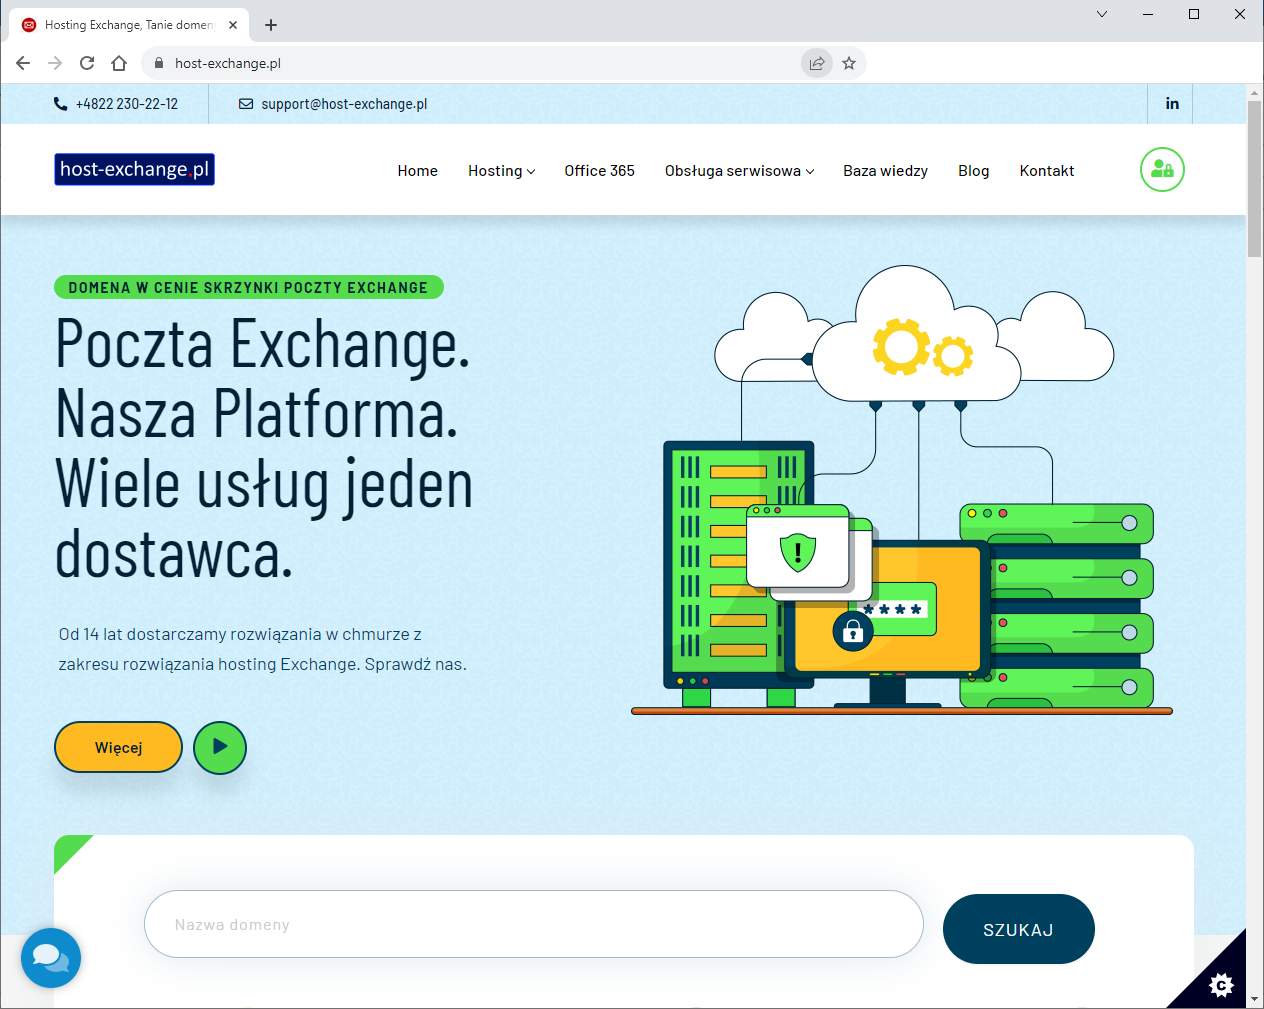 host-exchange.pl